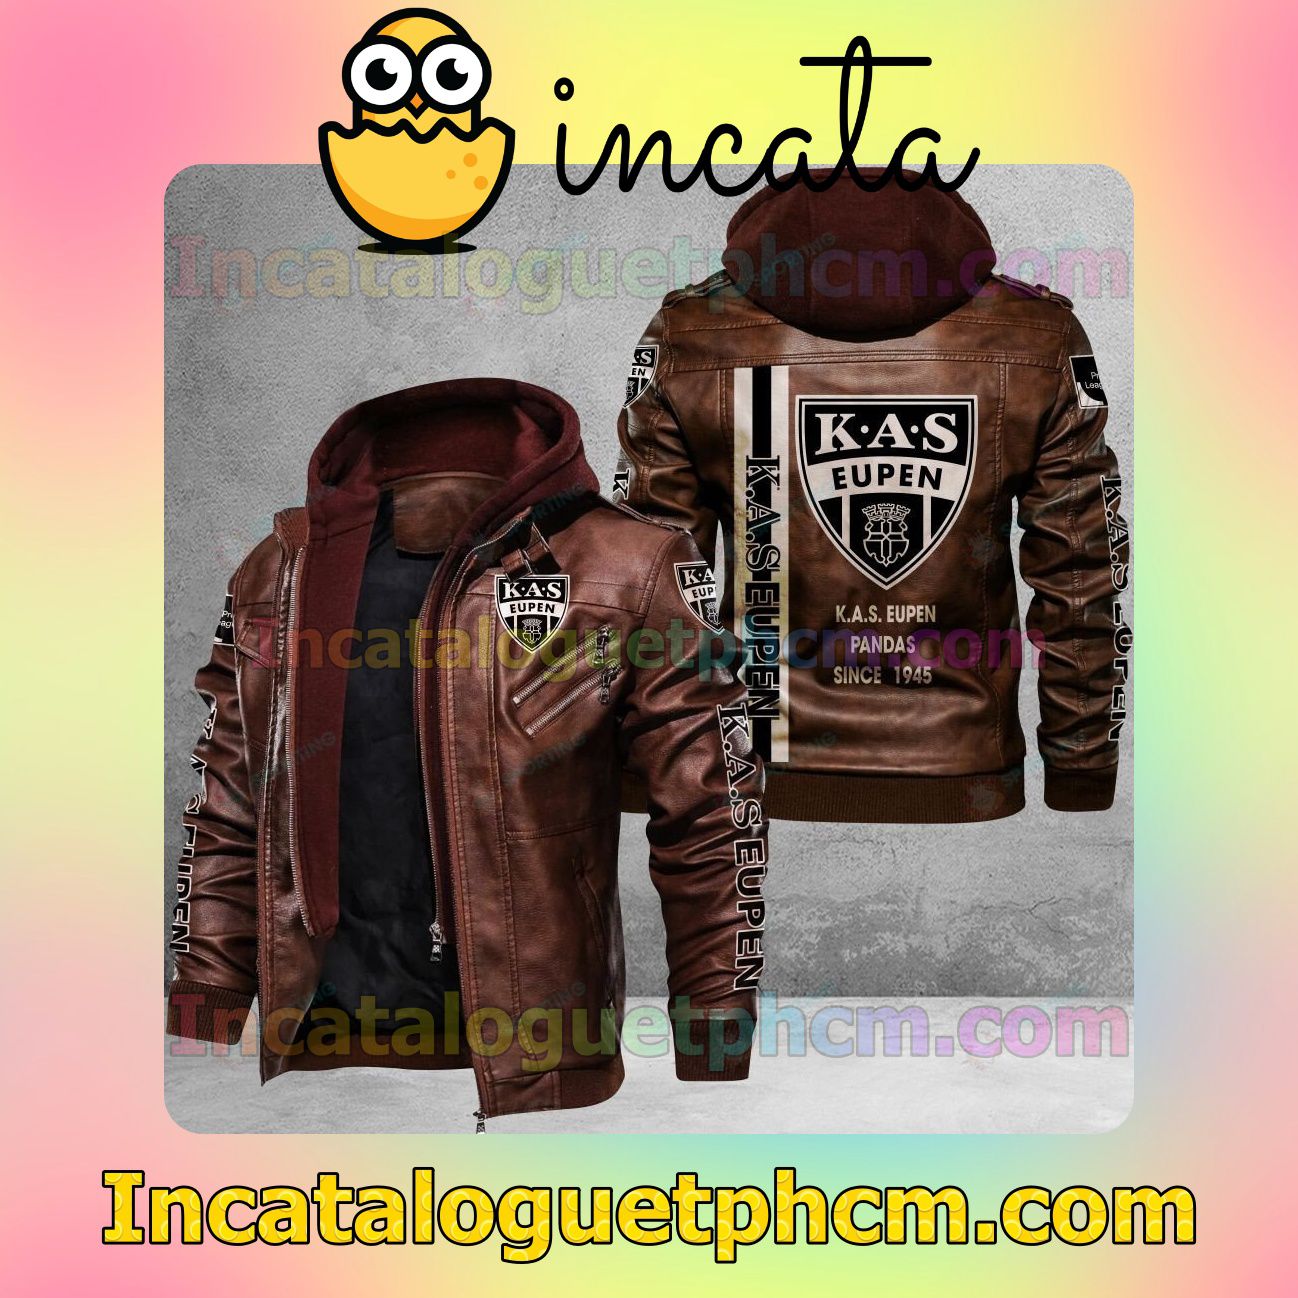 Around Me K.A.S. Eupen Brand Uniform Leather Jacket